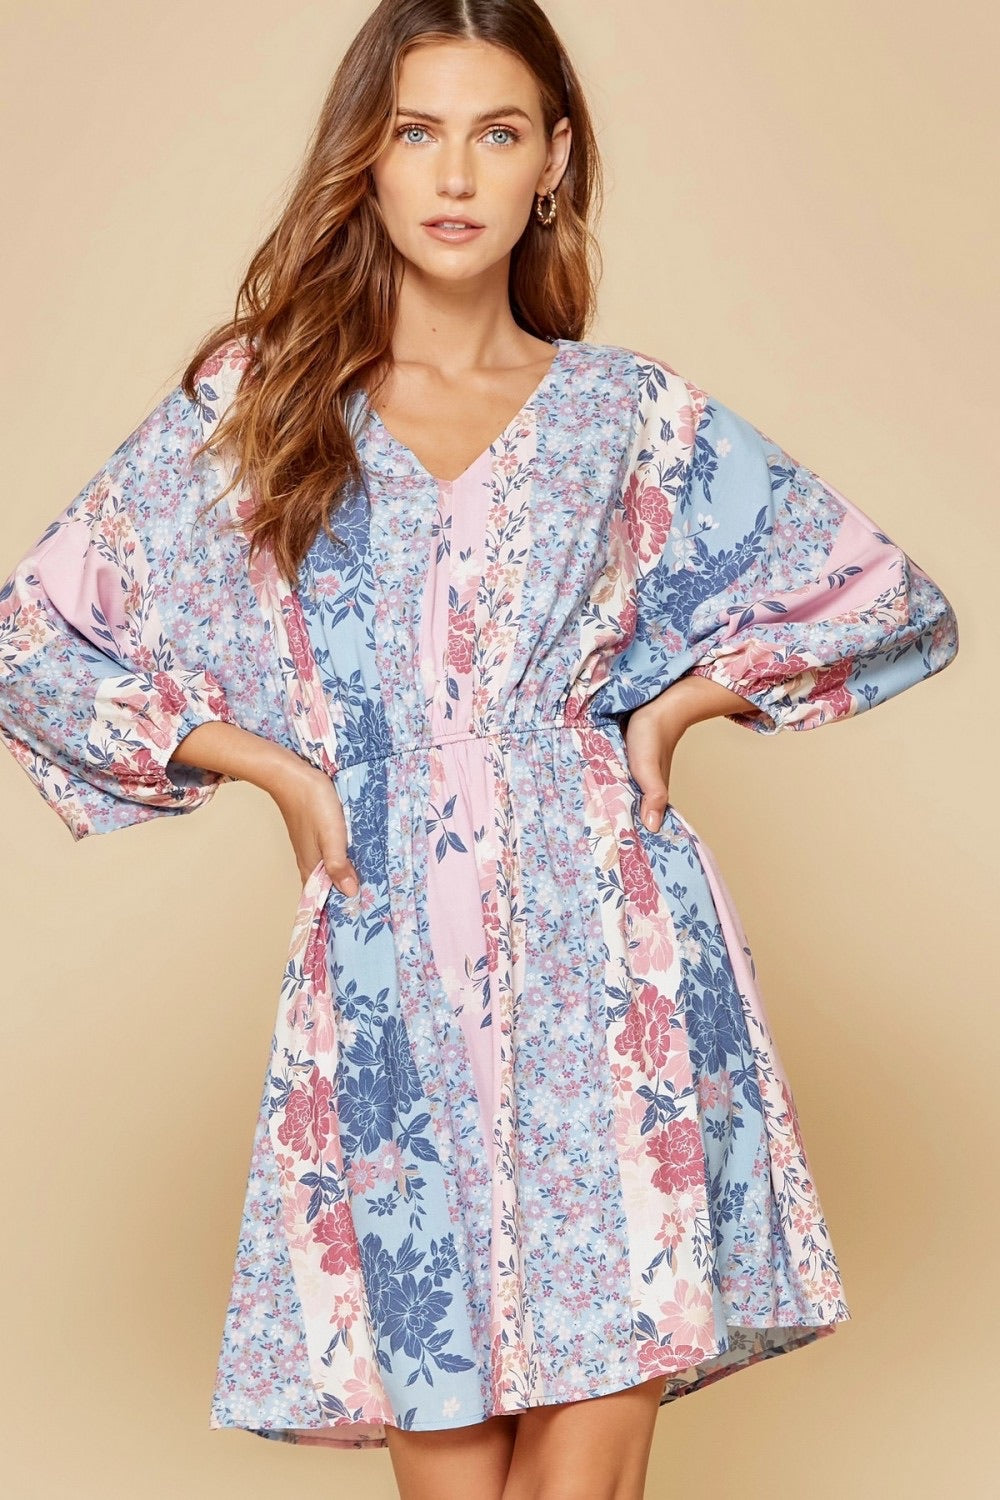 Savanna Jane Pastel Patchwork Dress – Perch Boutique